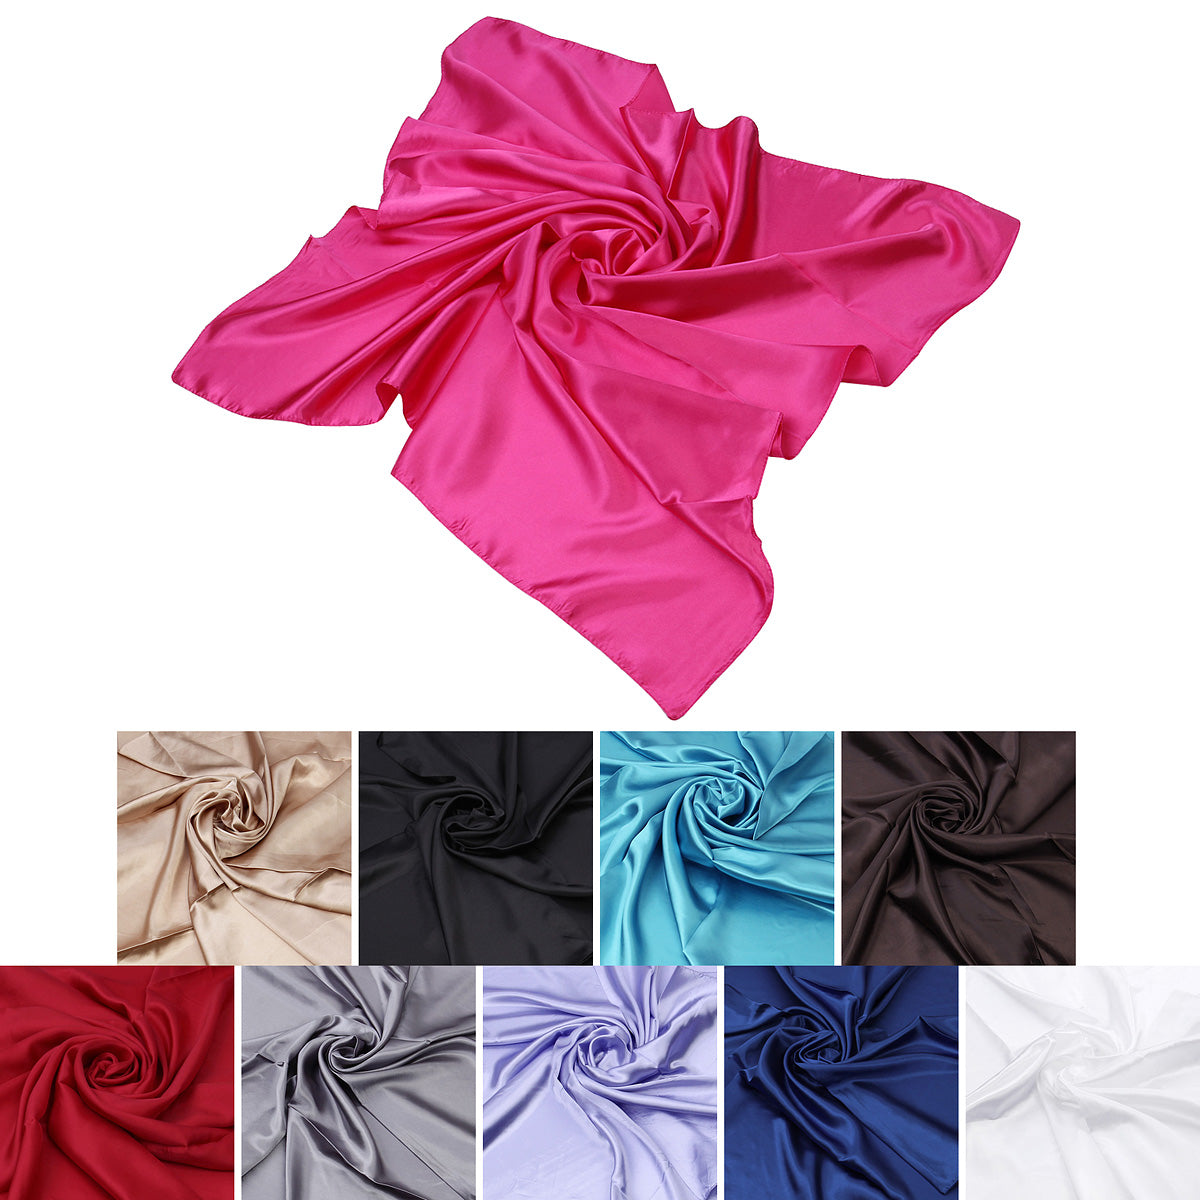 TrendsBlue Elegant Large Silk Feel Solid Color Satin Square Scarf Wrap, 36 inch